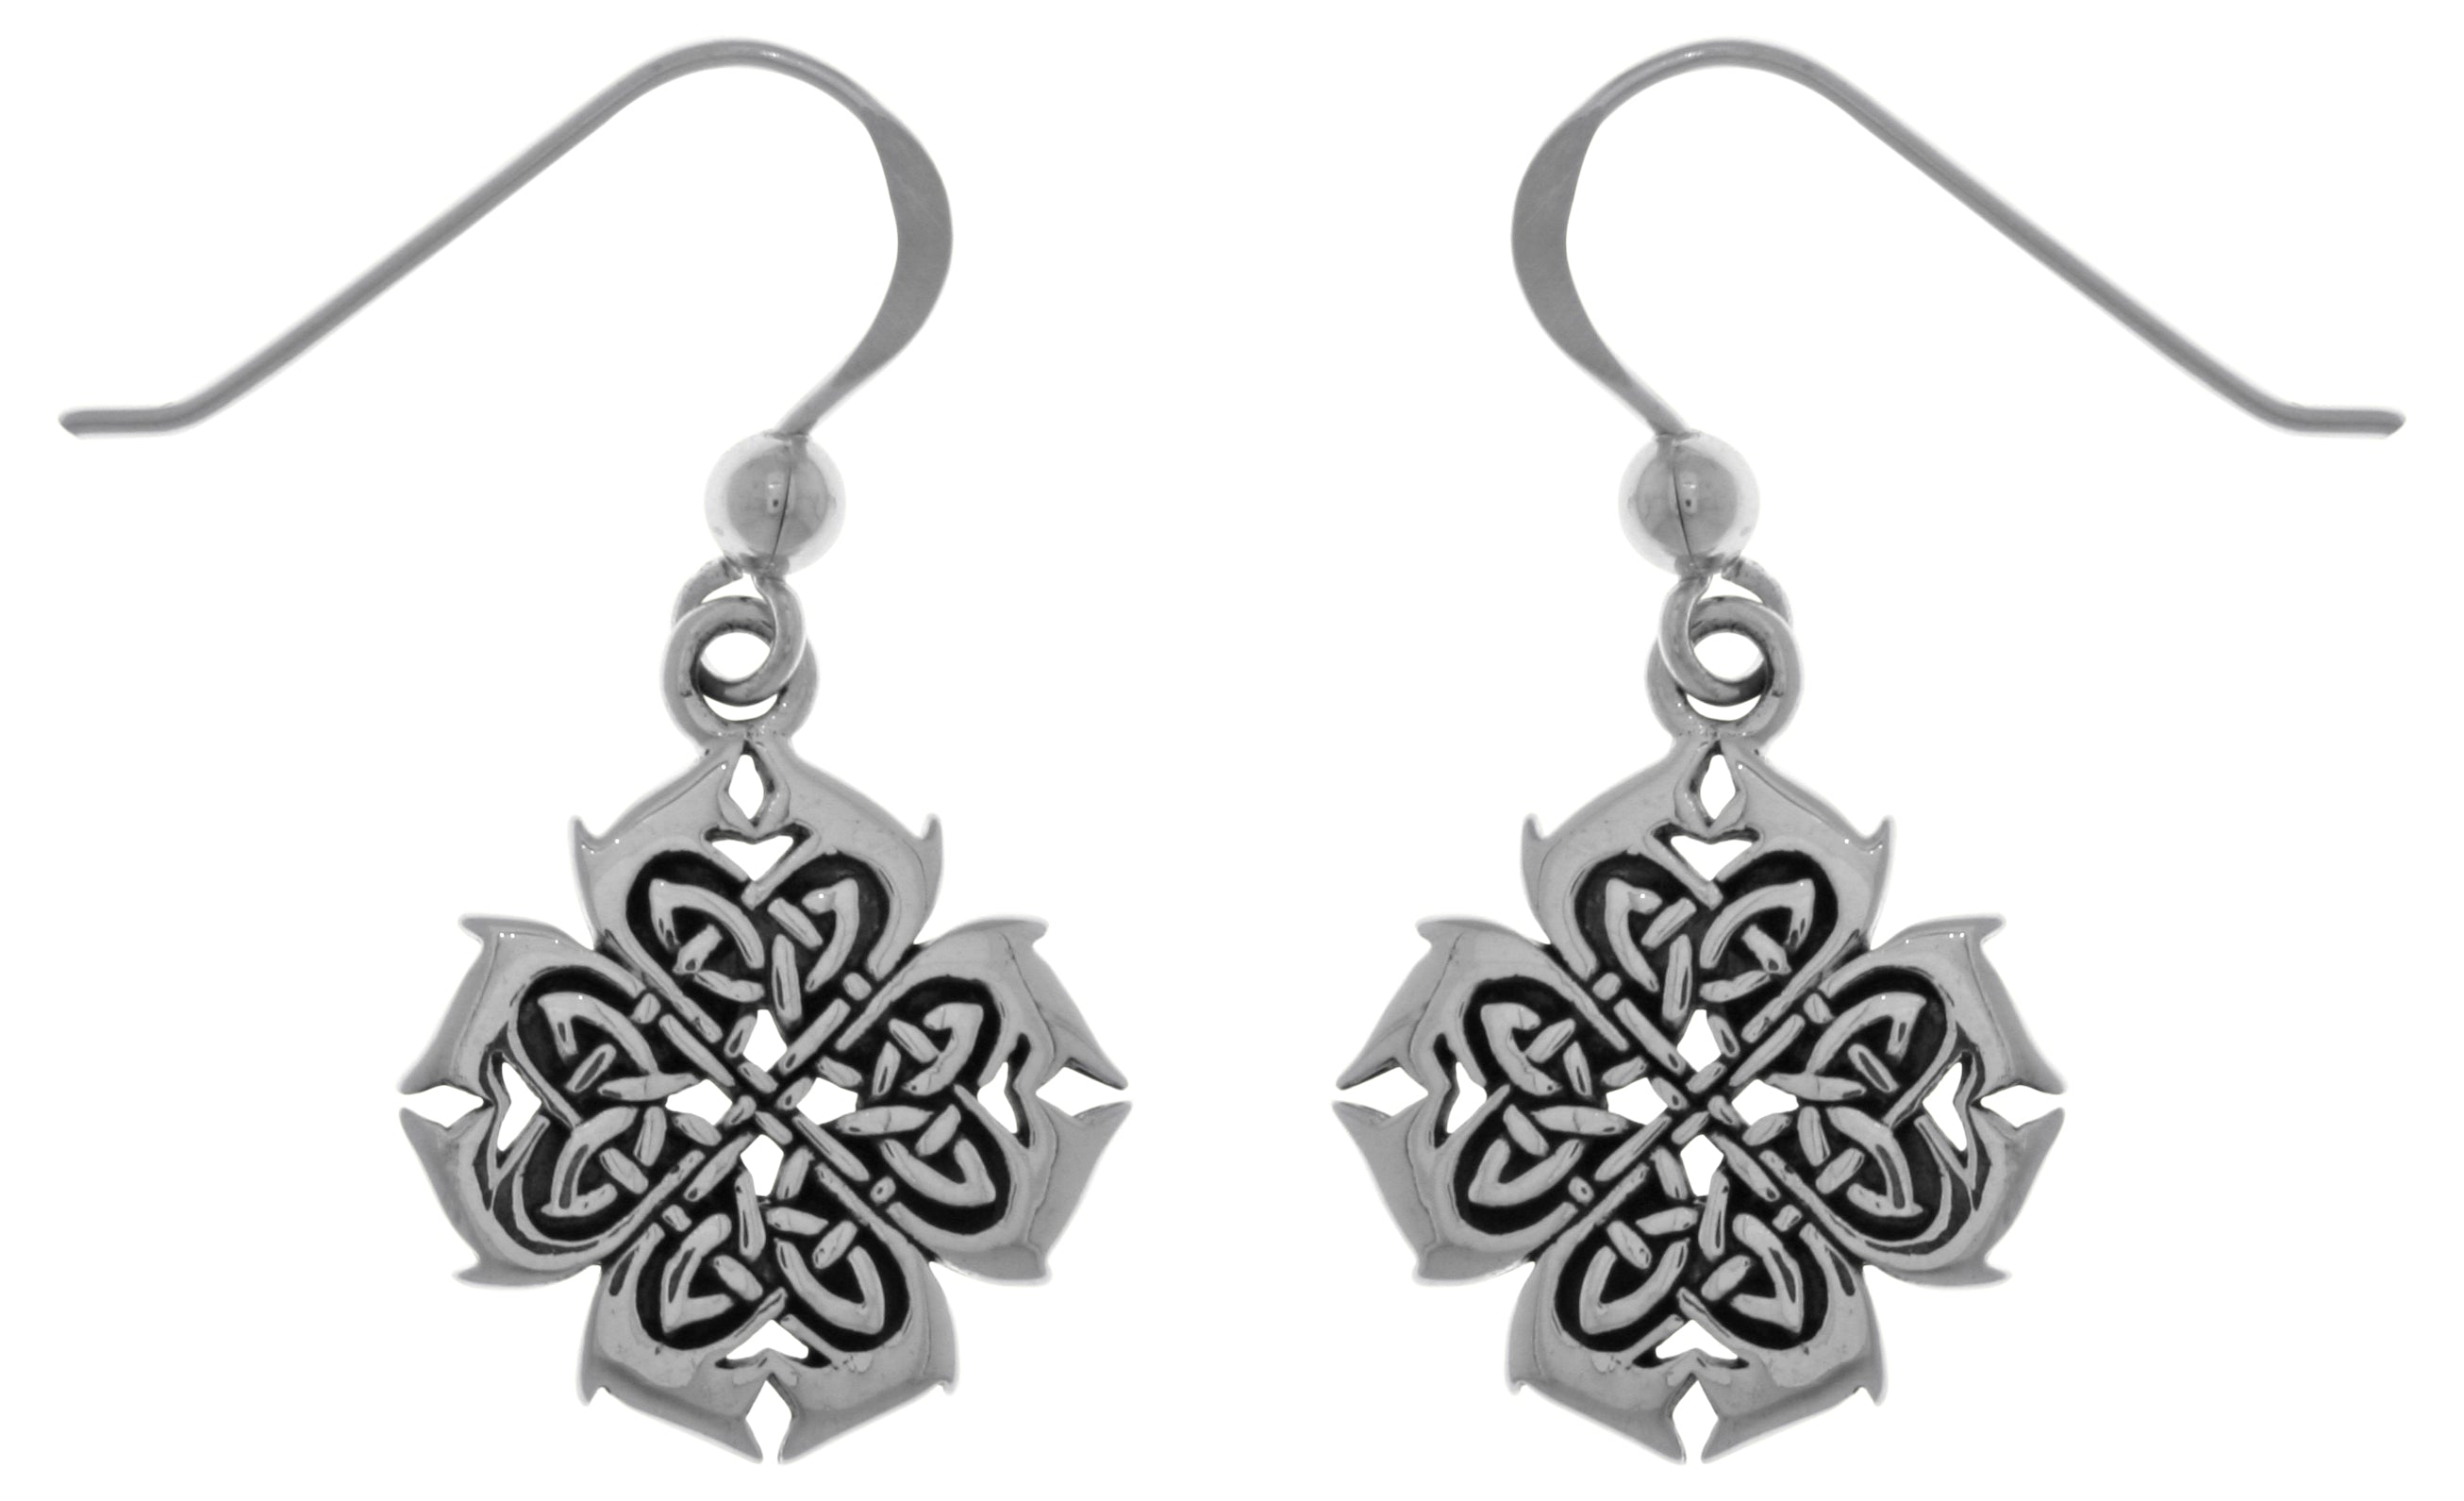 Jewelry Trends Sterling Silver Celtic Knotwork Cross of Inspiration Dangle Earrings